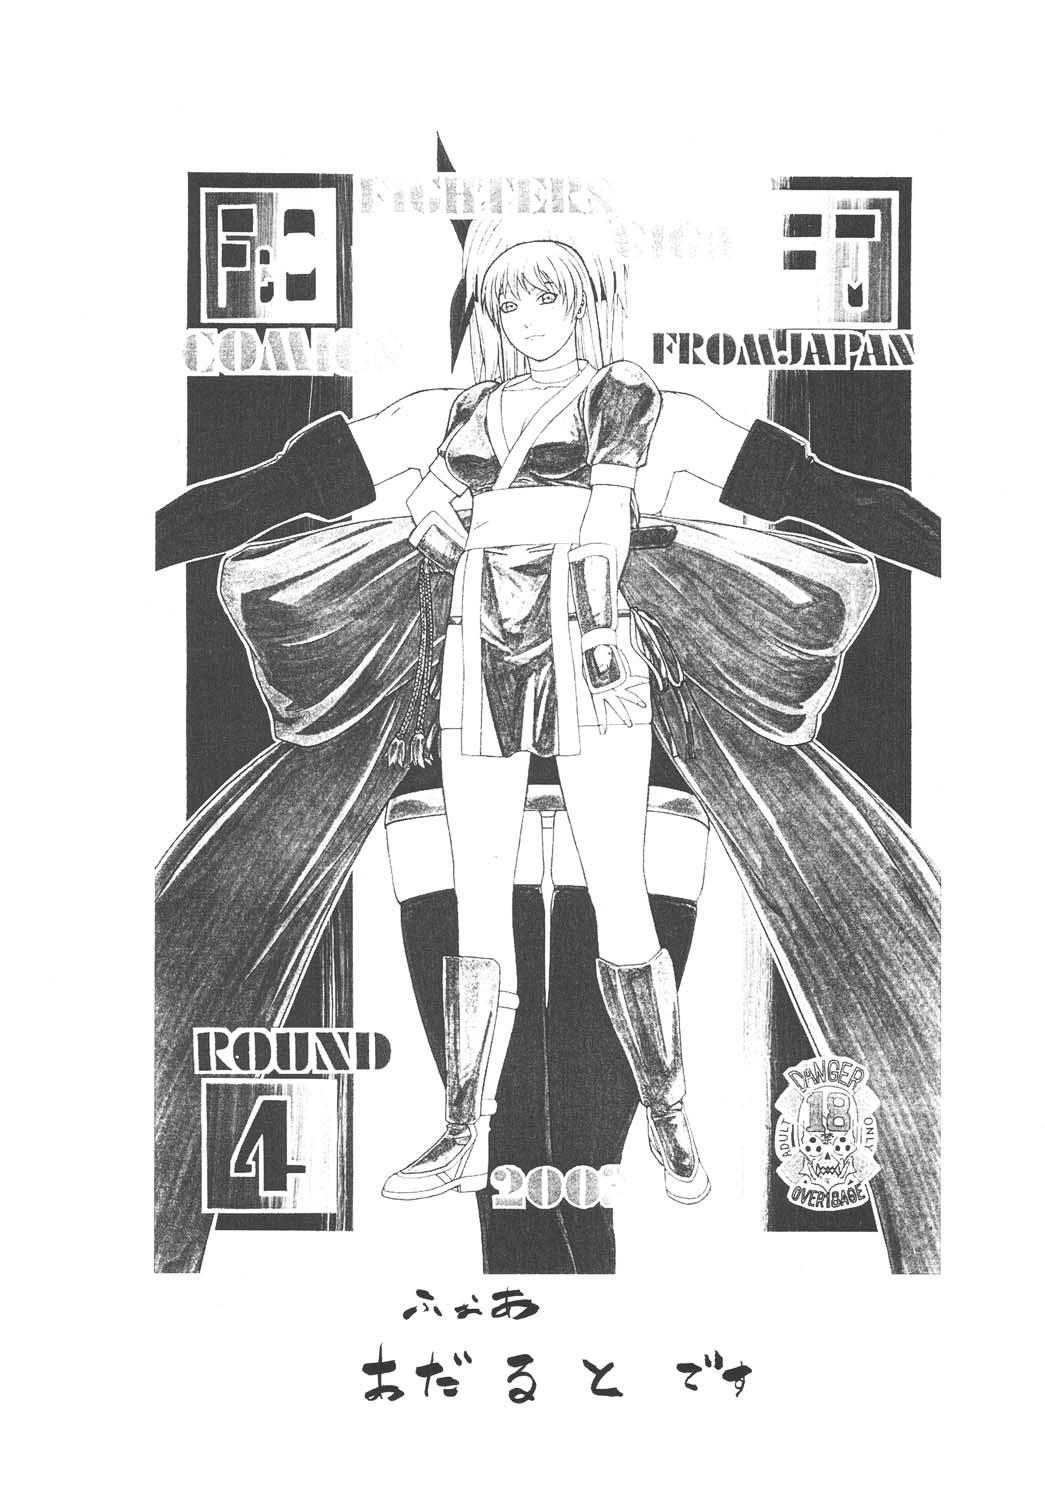 Fighters Giga Comics Round 4 2